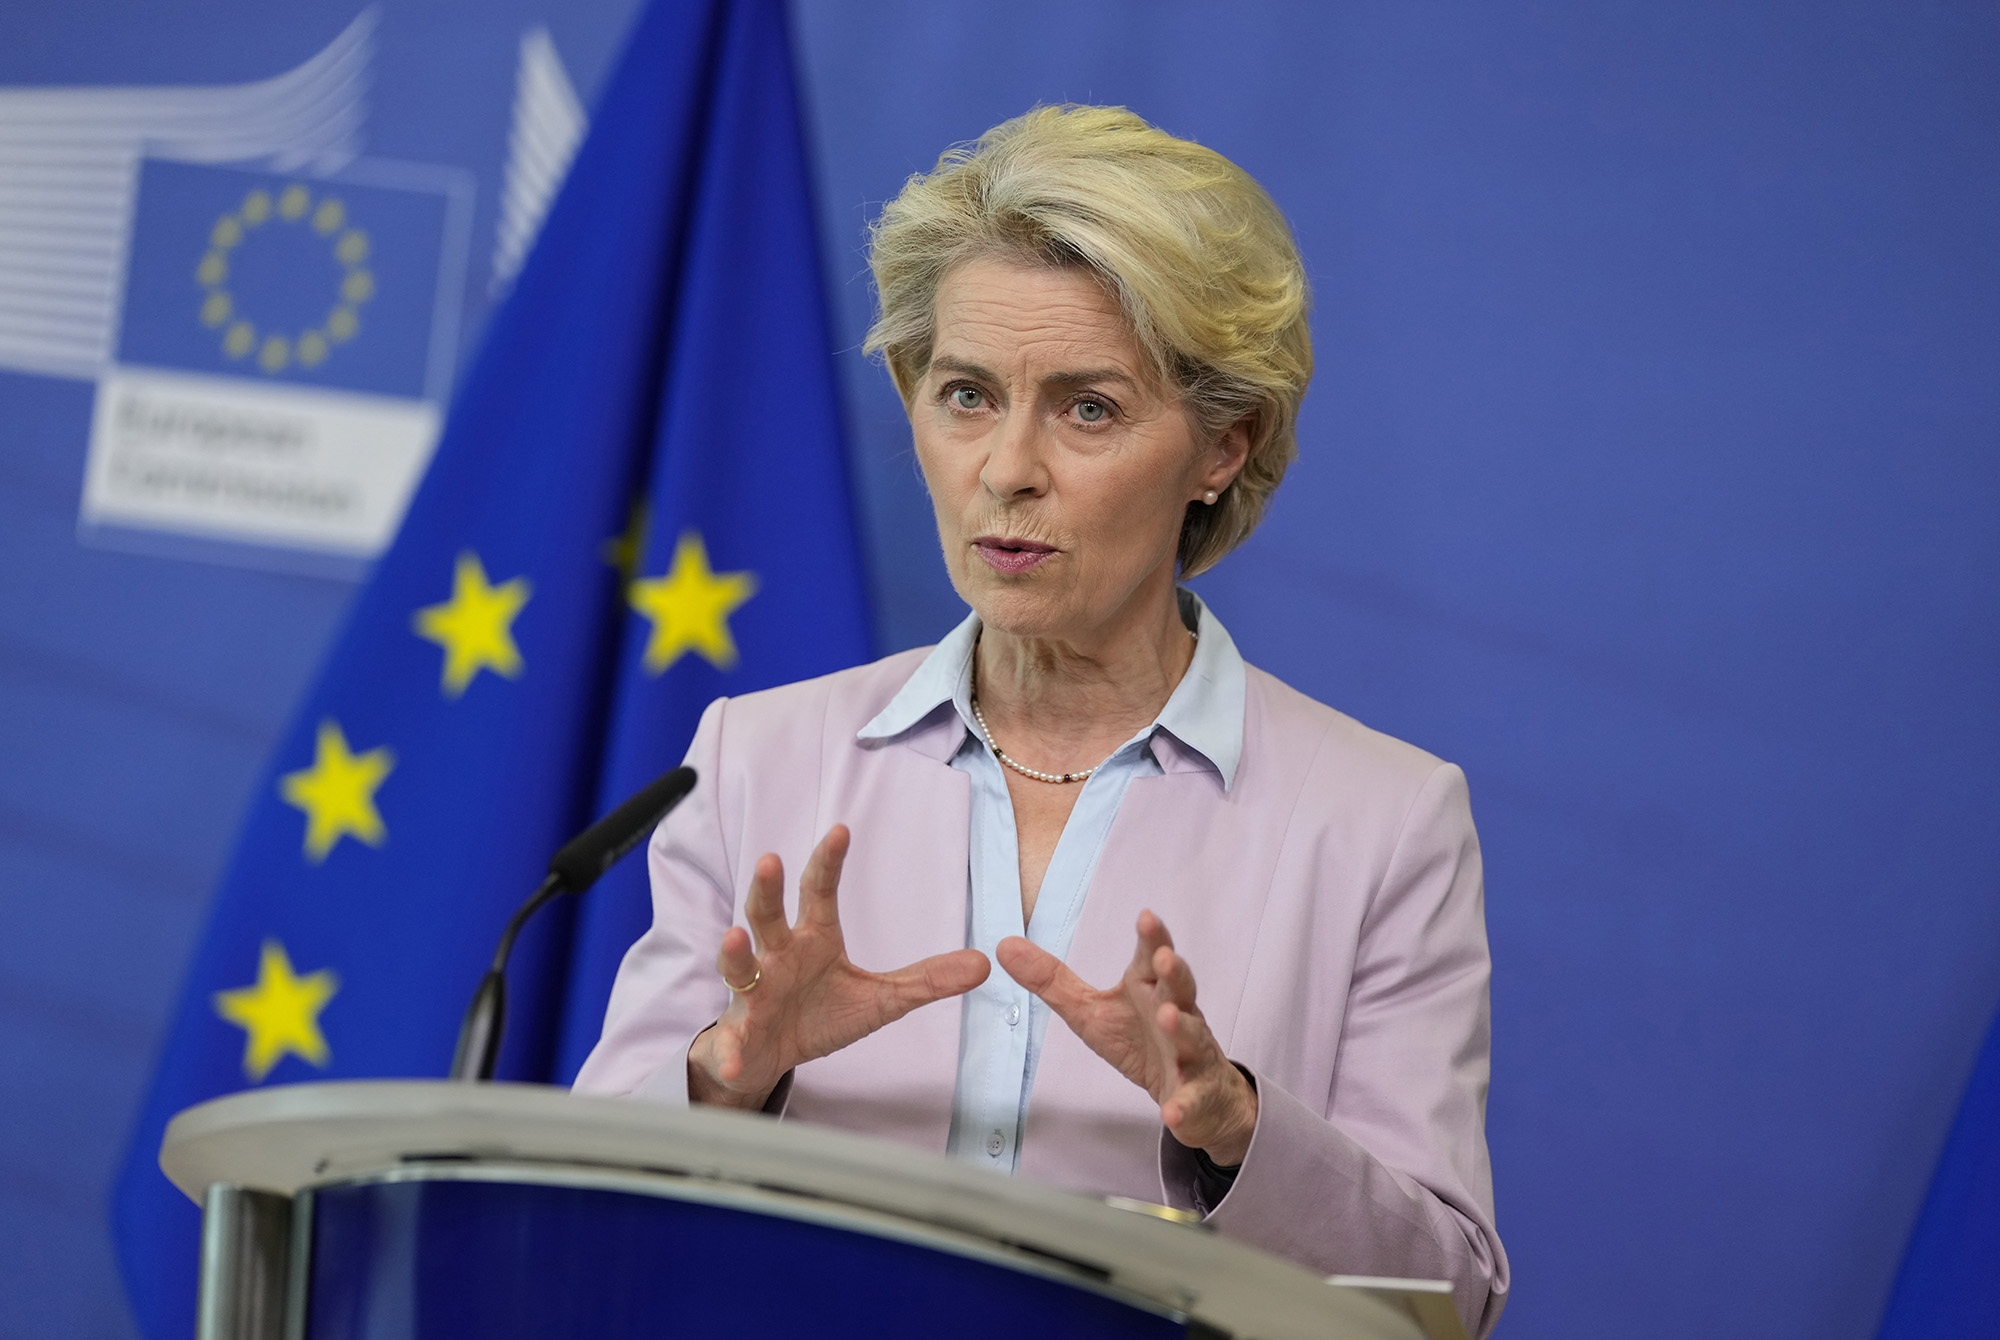 European Commission President Ursula von der Leyen speaks during a media conference at the EU headquarters in Brussels, Belgium, on September 7.